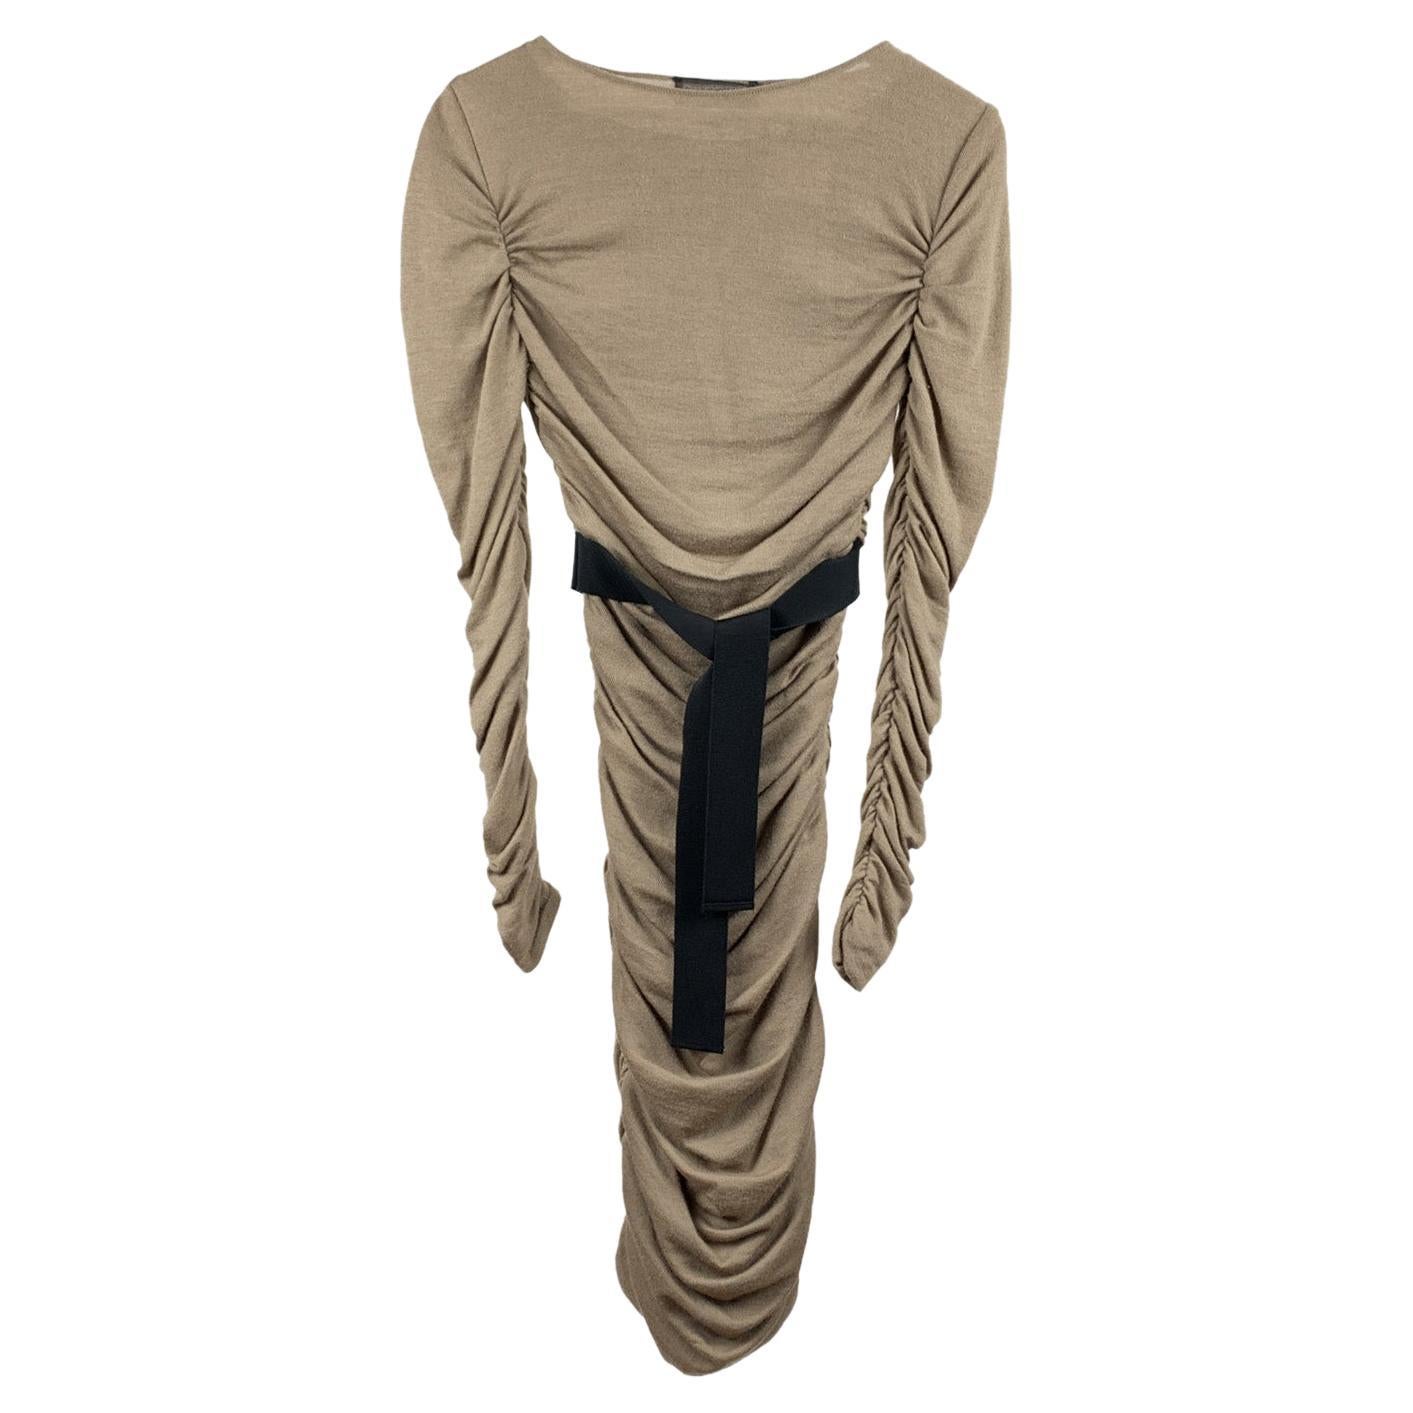 Giambattista Valli Beige Wool Silk Cashmere Draped Knit Dress Size XS